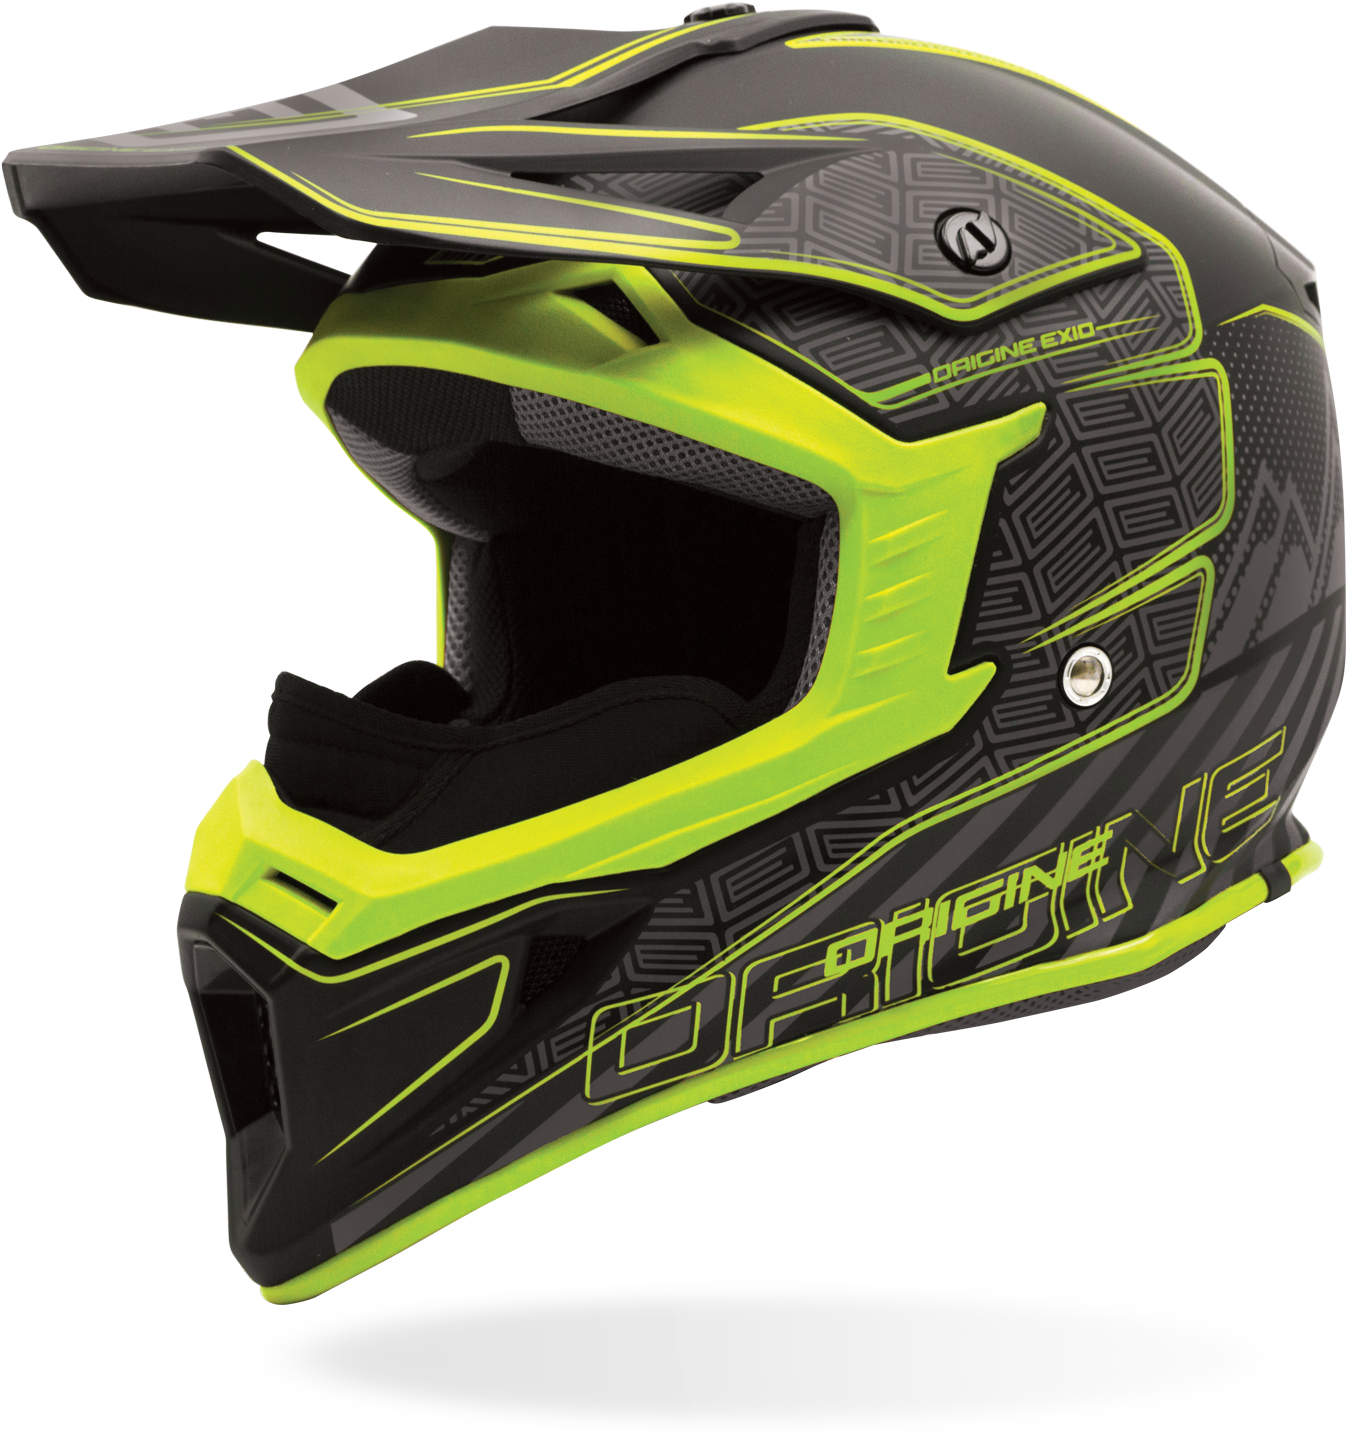 Exio-main - Origine Exio Helmet Clipart (1500x1500), Png Download